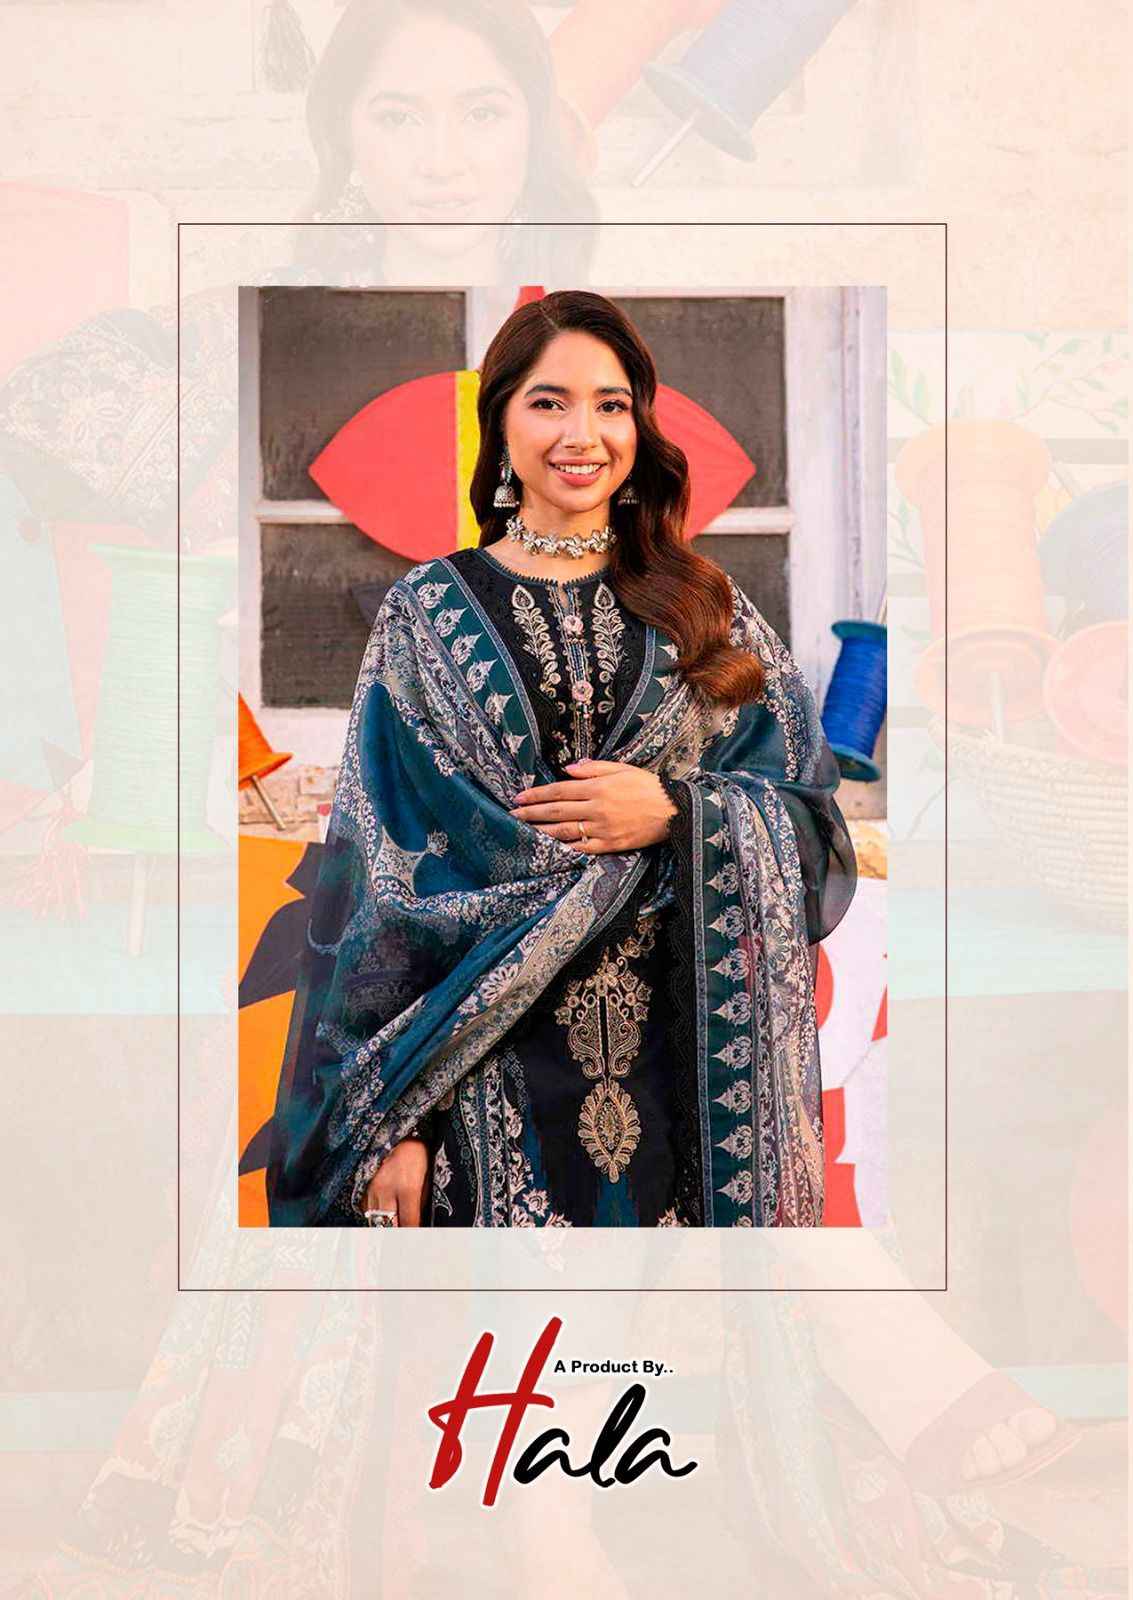 Hala Ramsha Vol-2 Heavy Cotton Dress Material (6 pc Cataloge)